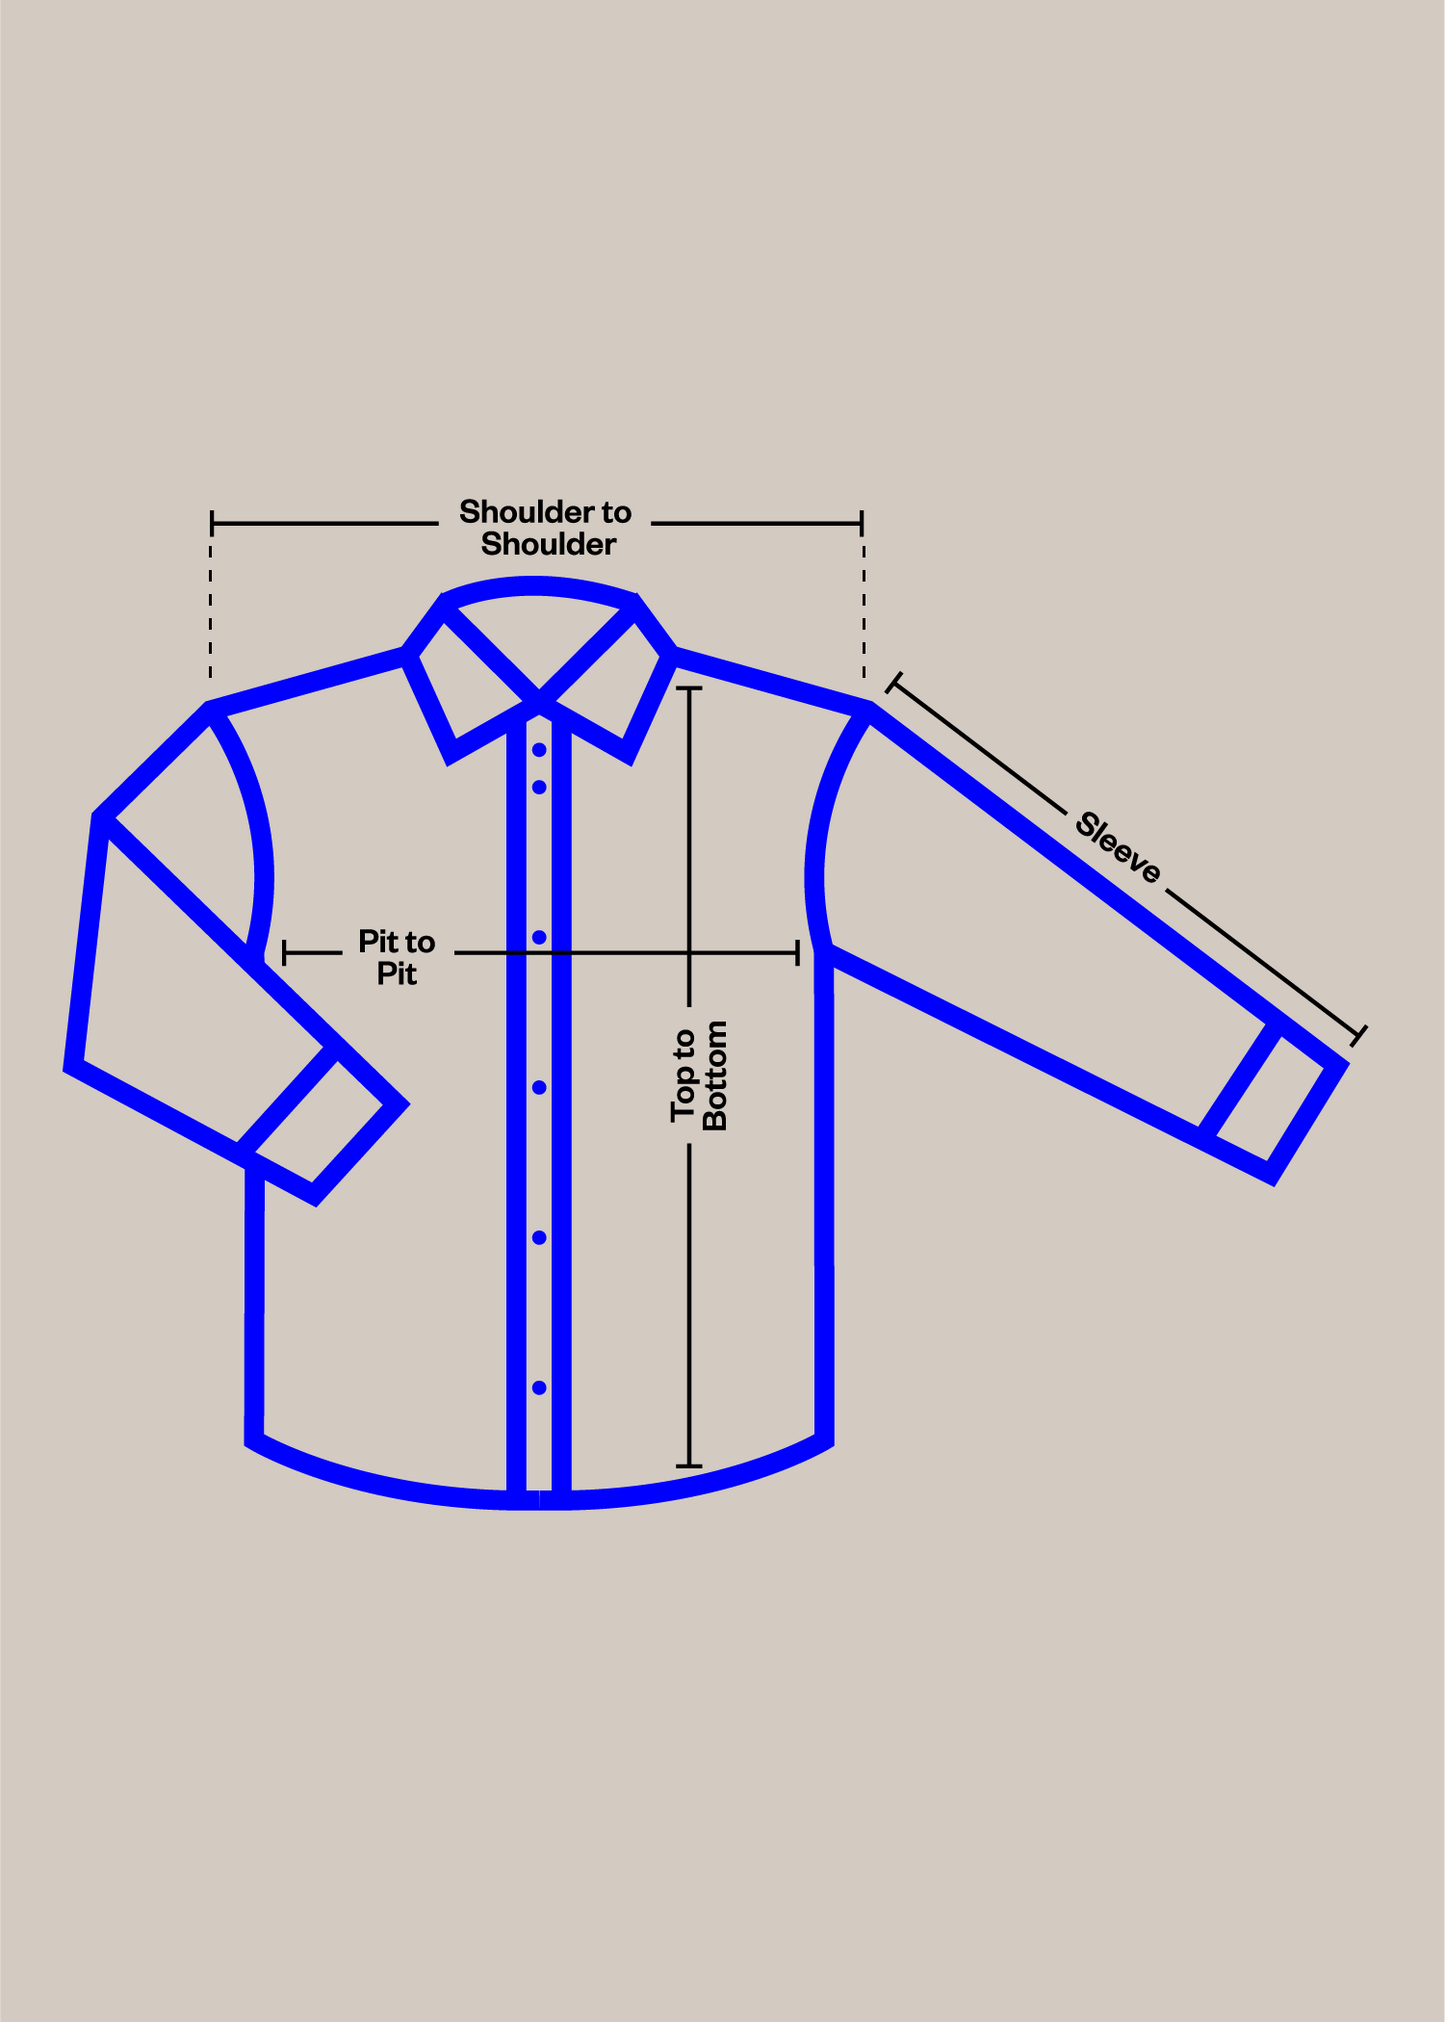 1980s L'ideal Bleu de Travail French Workwear Chore Jacket Size S/M